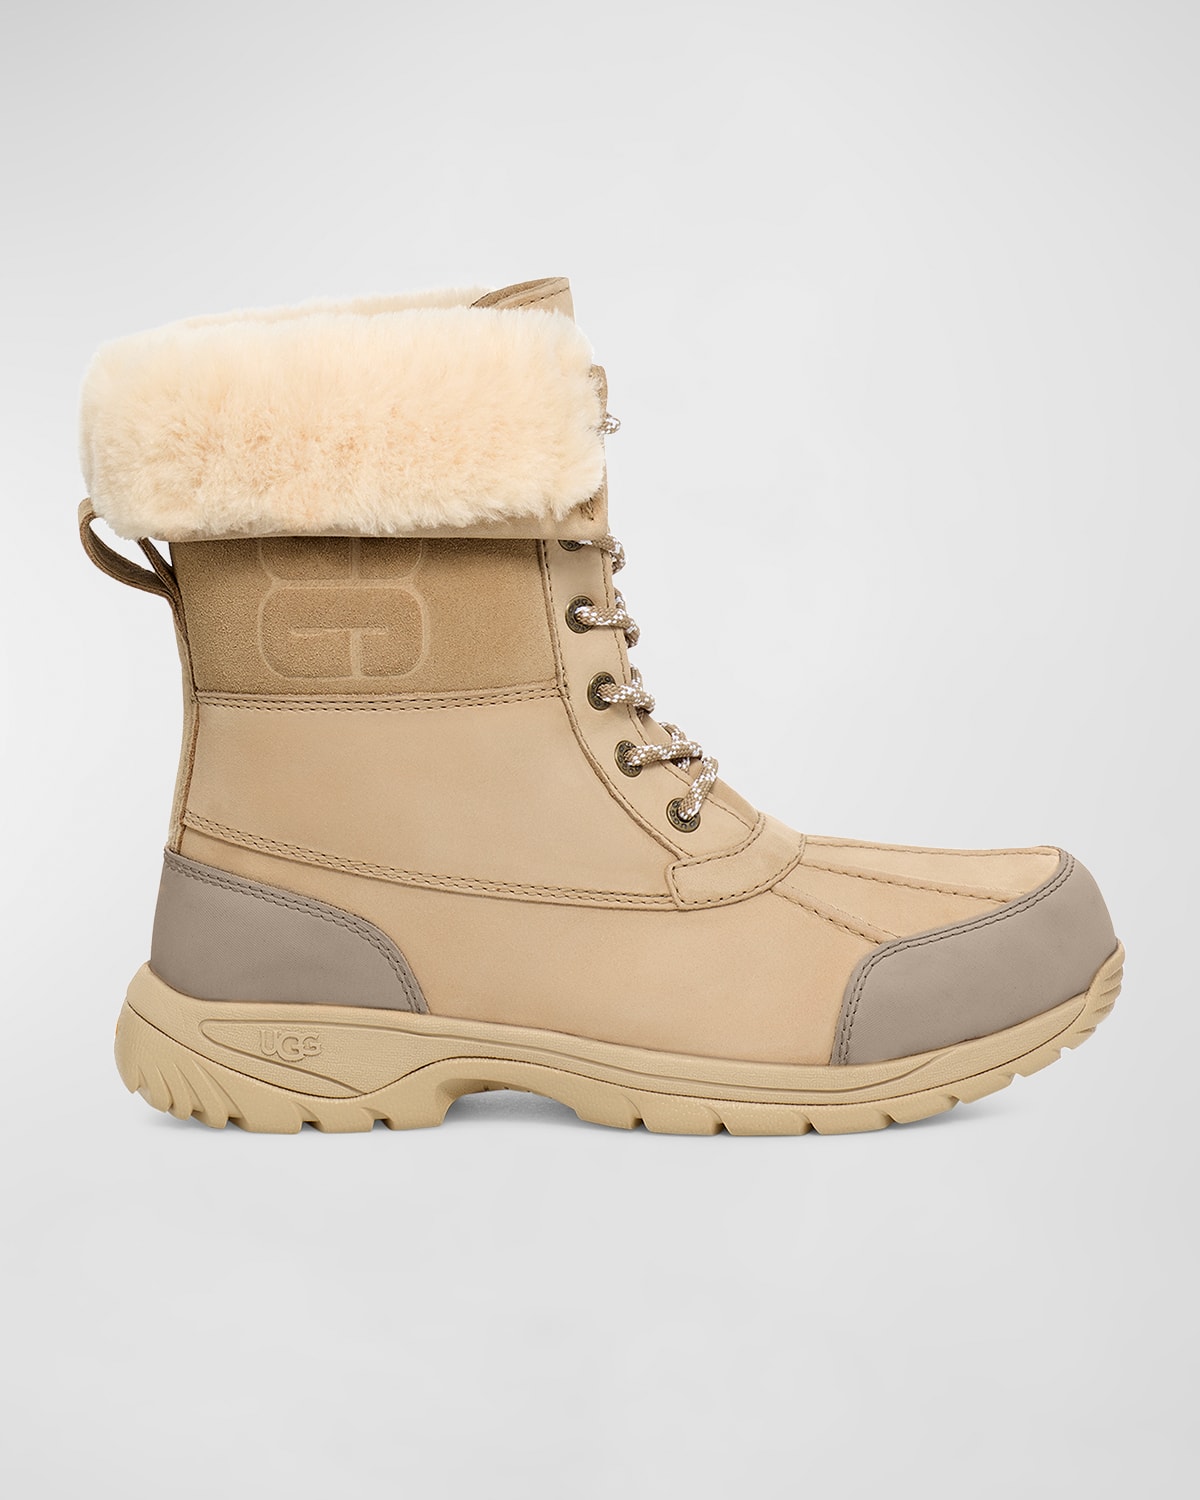 Men's Butte Logo Waterproof Leather Snow Boots